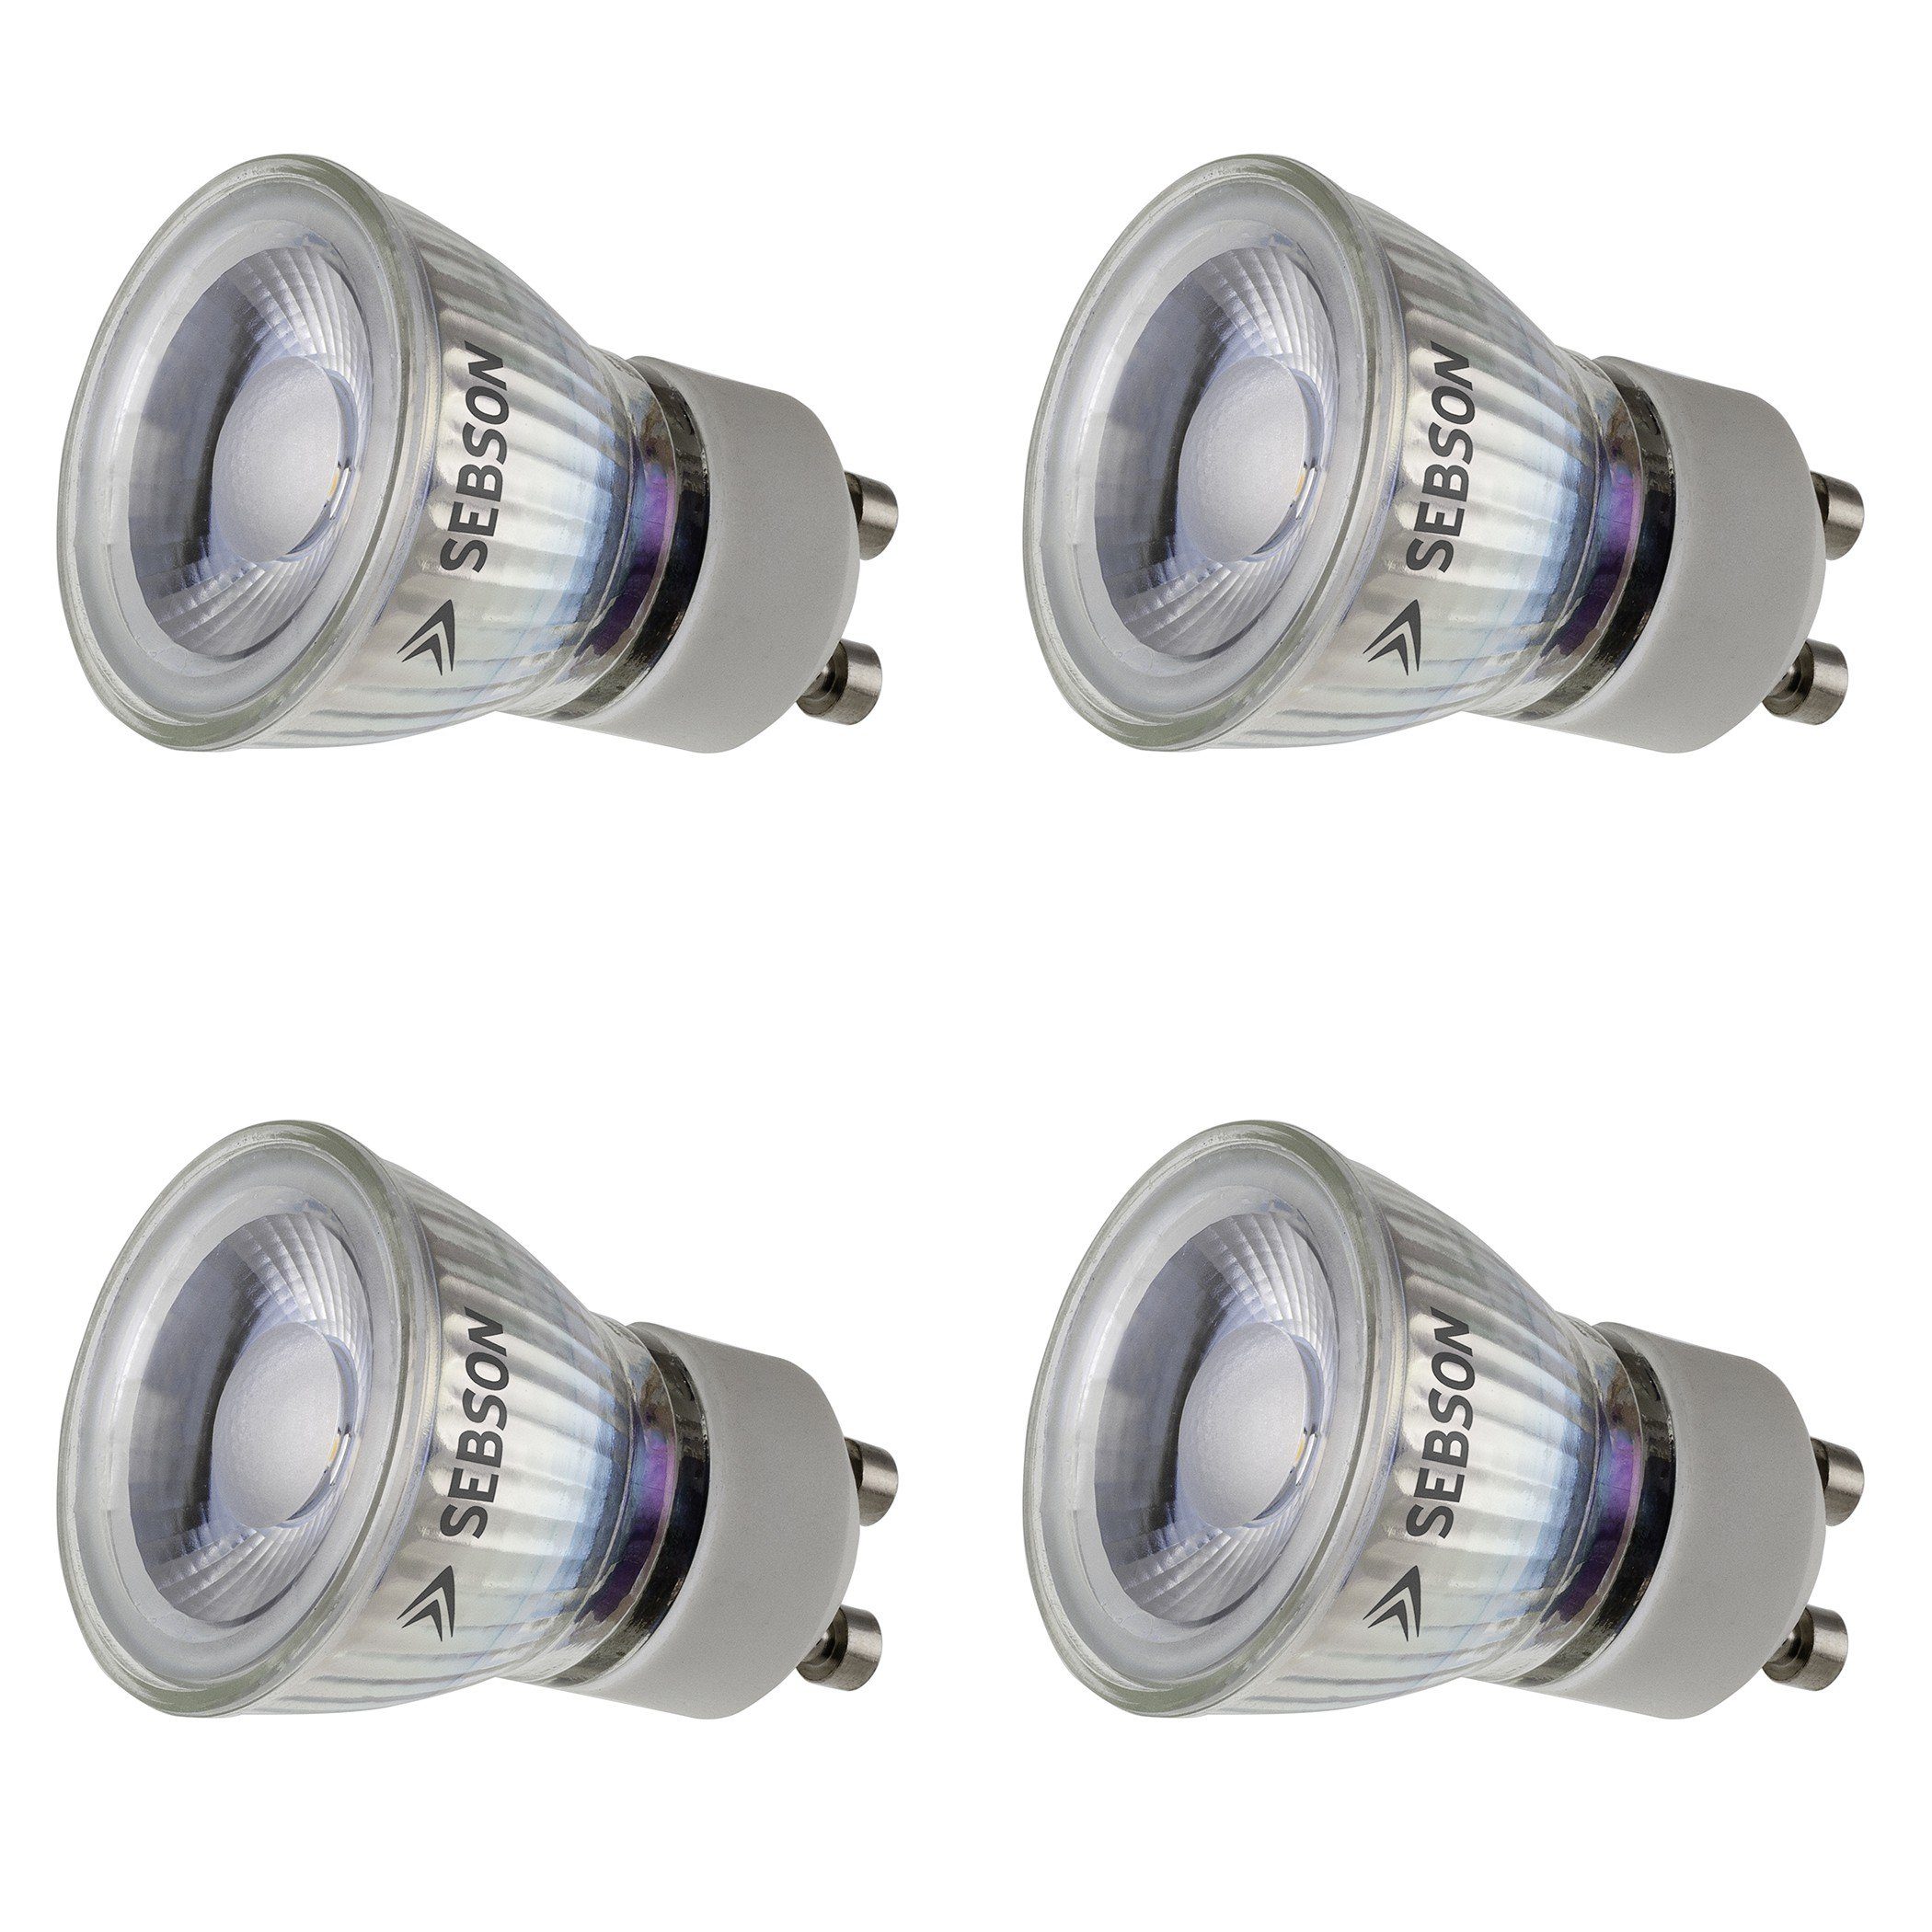 SEBSON LED-Leuchtmittel LED Lampe GU10 warmweiß 3W 35mm Durchmesser Spot 230V - 4er Pack